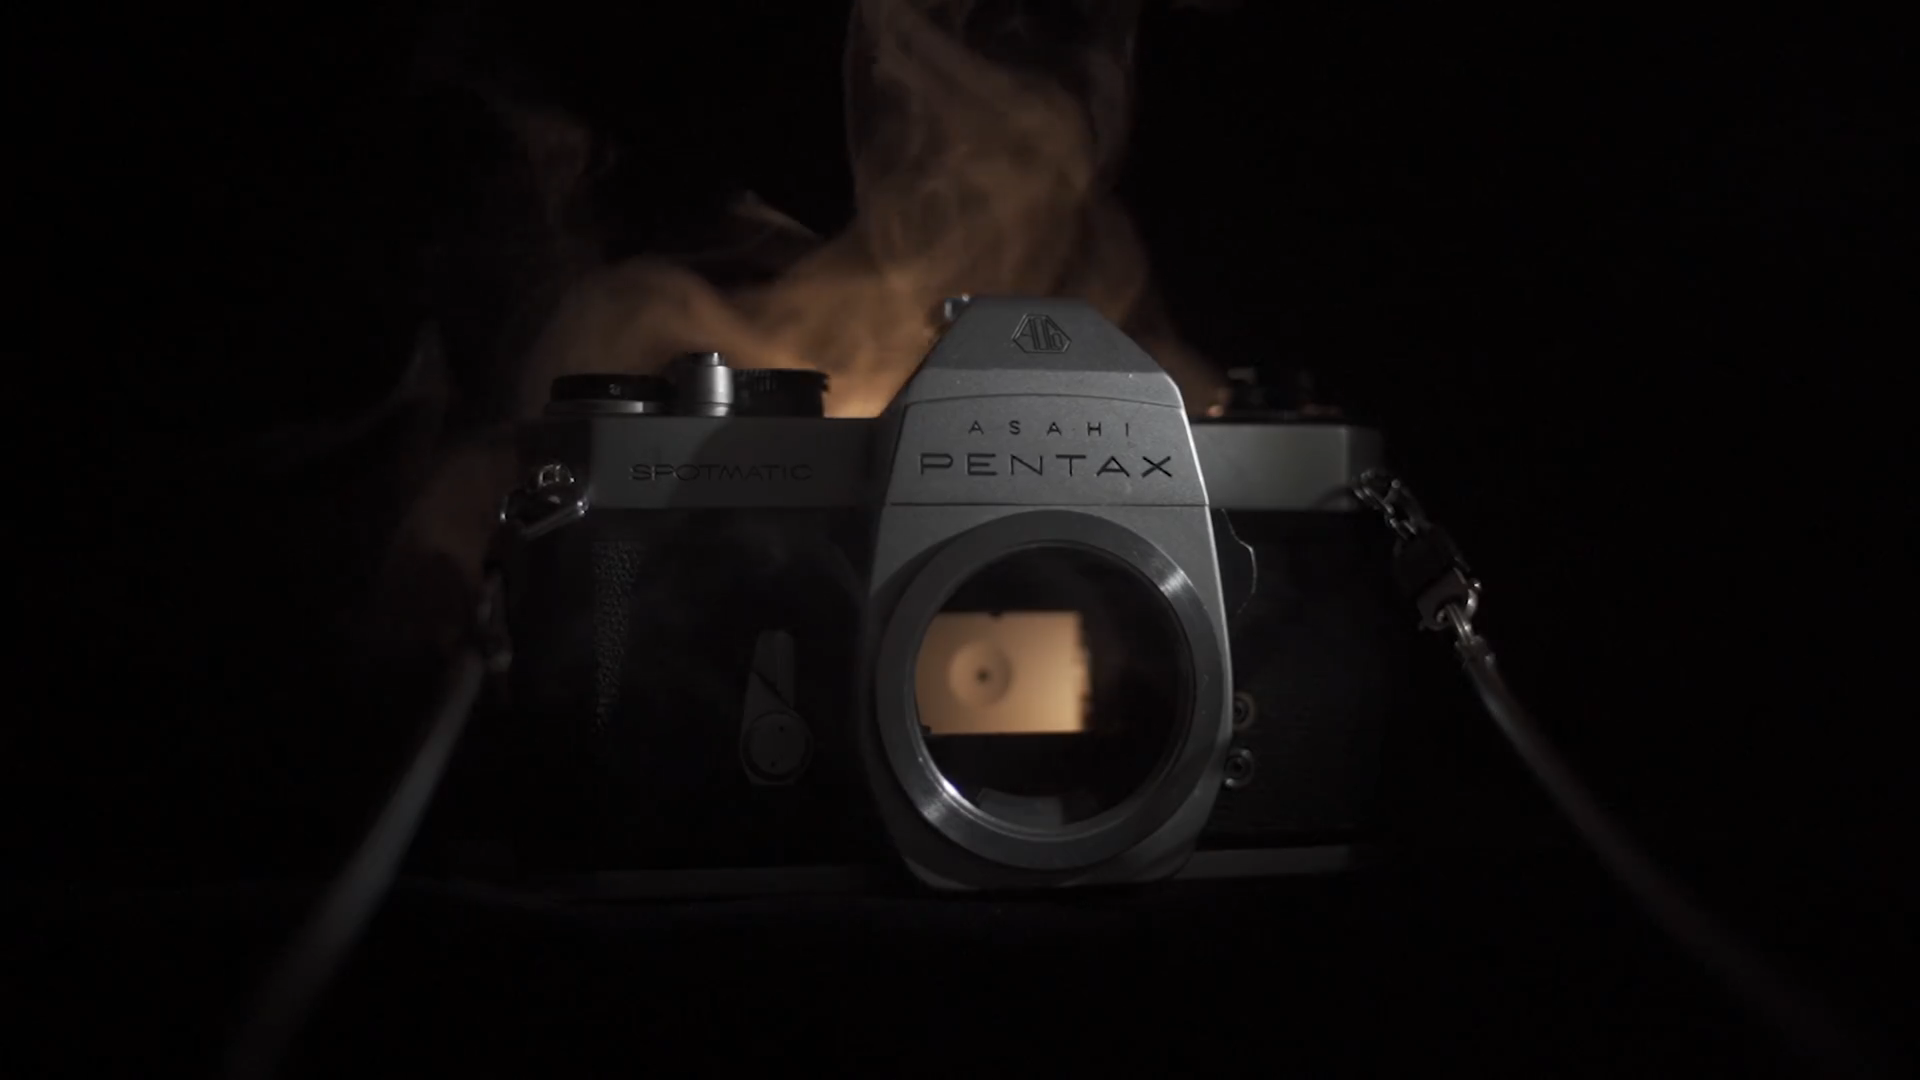 Тест фотоаппарата Asahi Pentax Spotmatic, любимой камеры Битлз